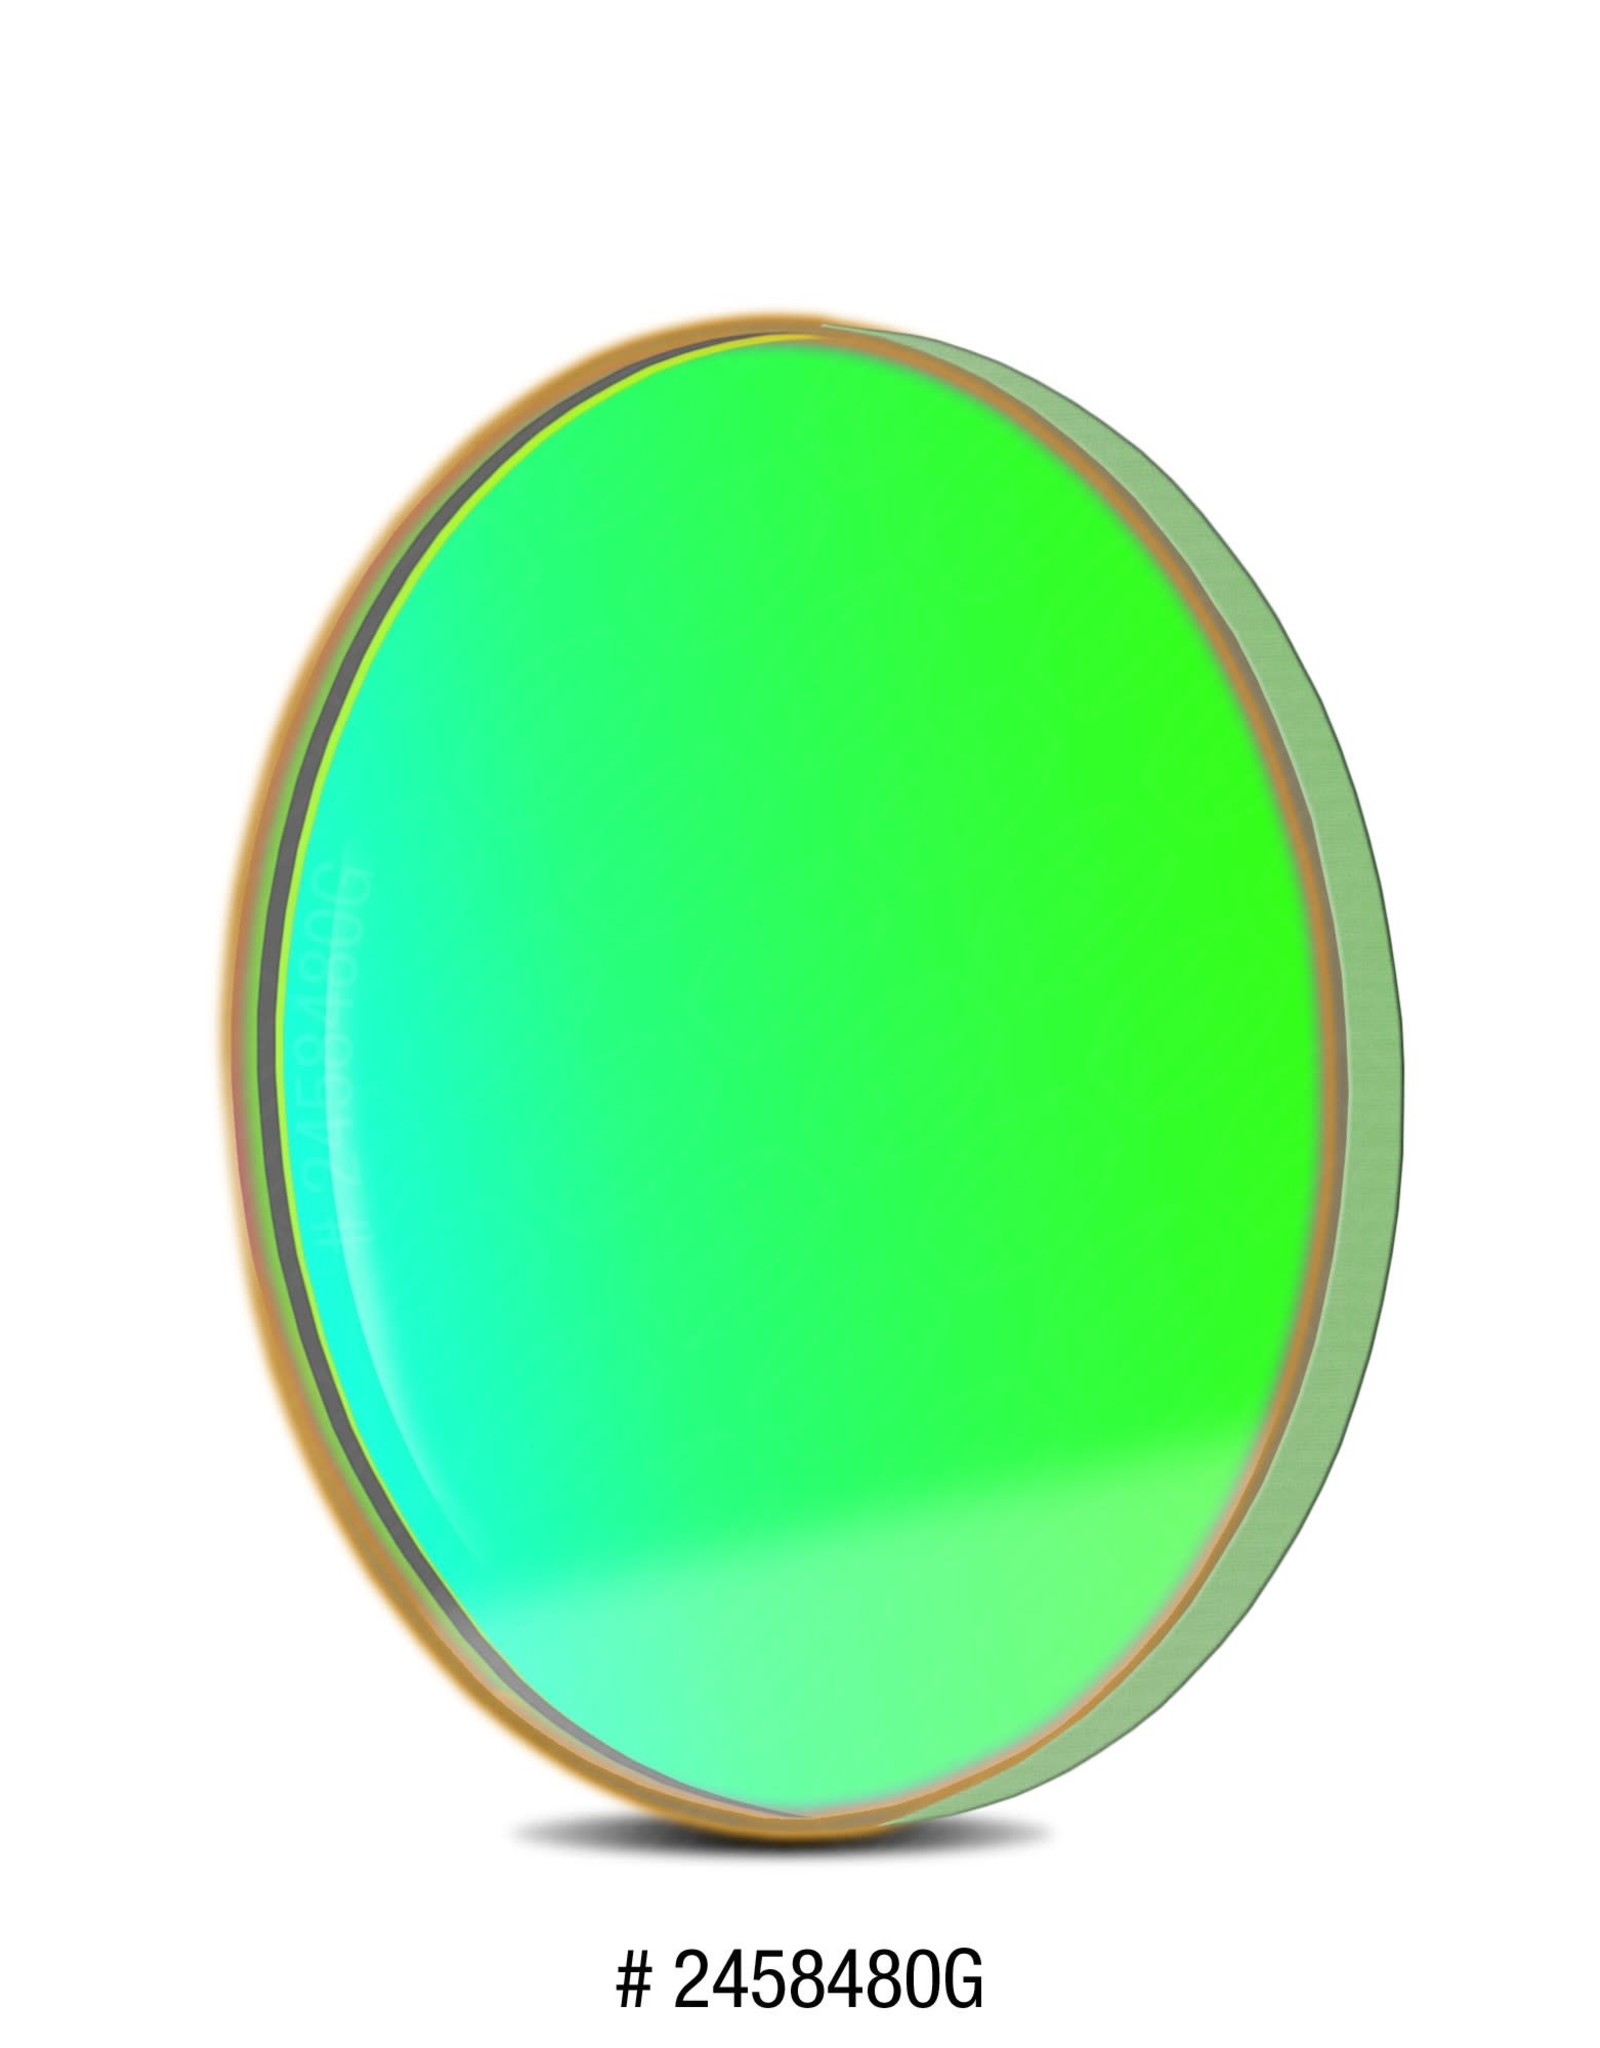 Baader Planetarium Baader G-CCD Filter (Green) (Specify Size)